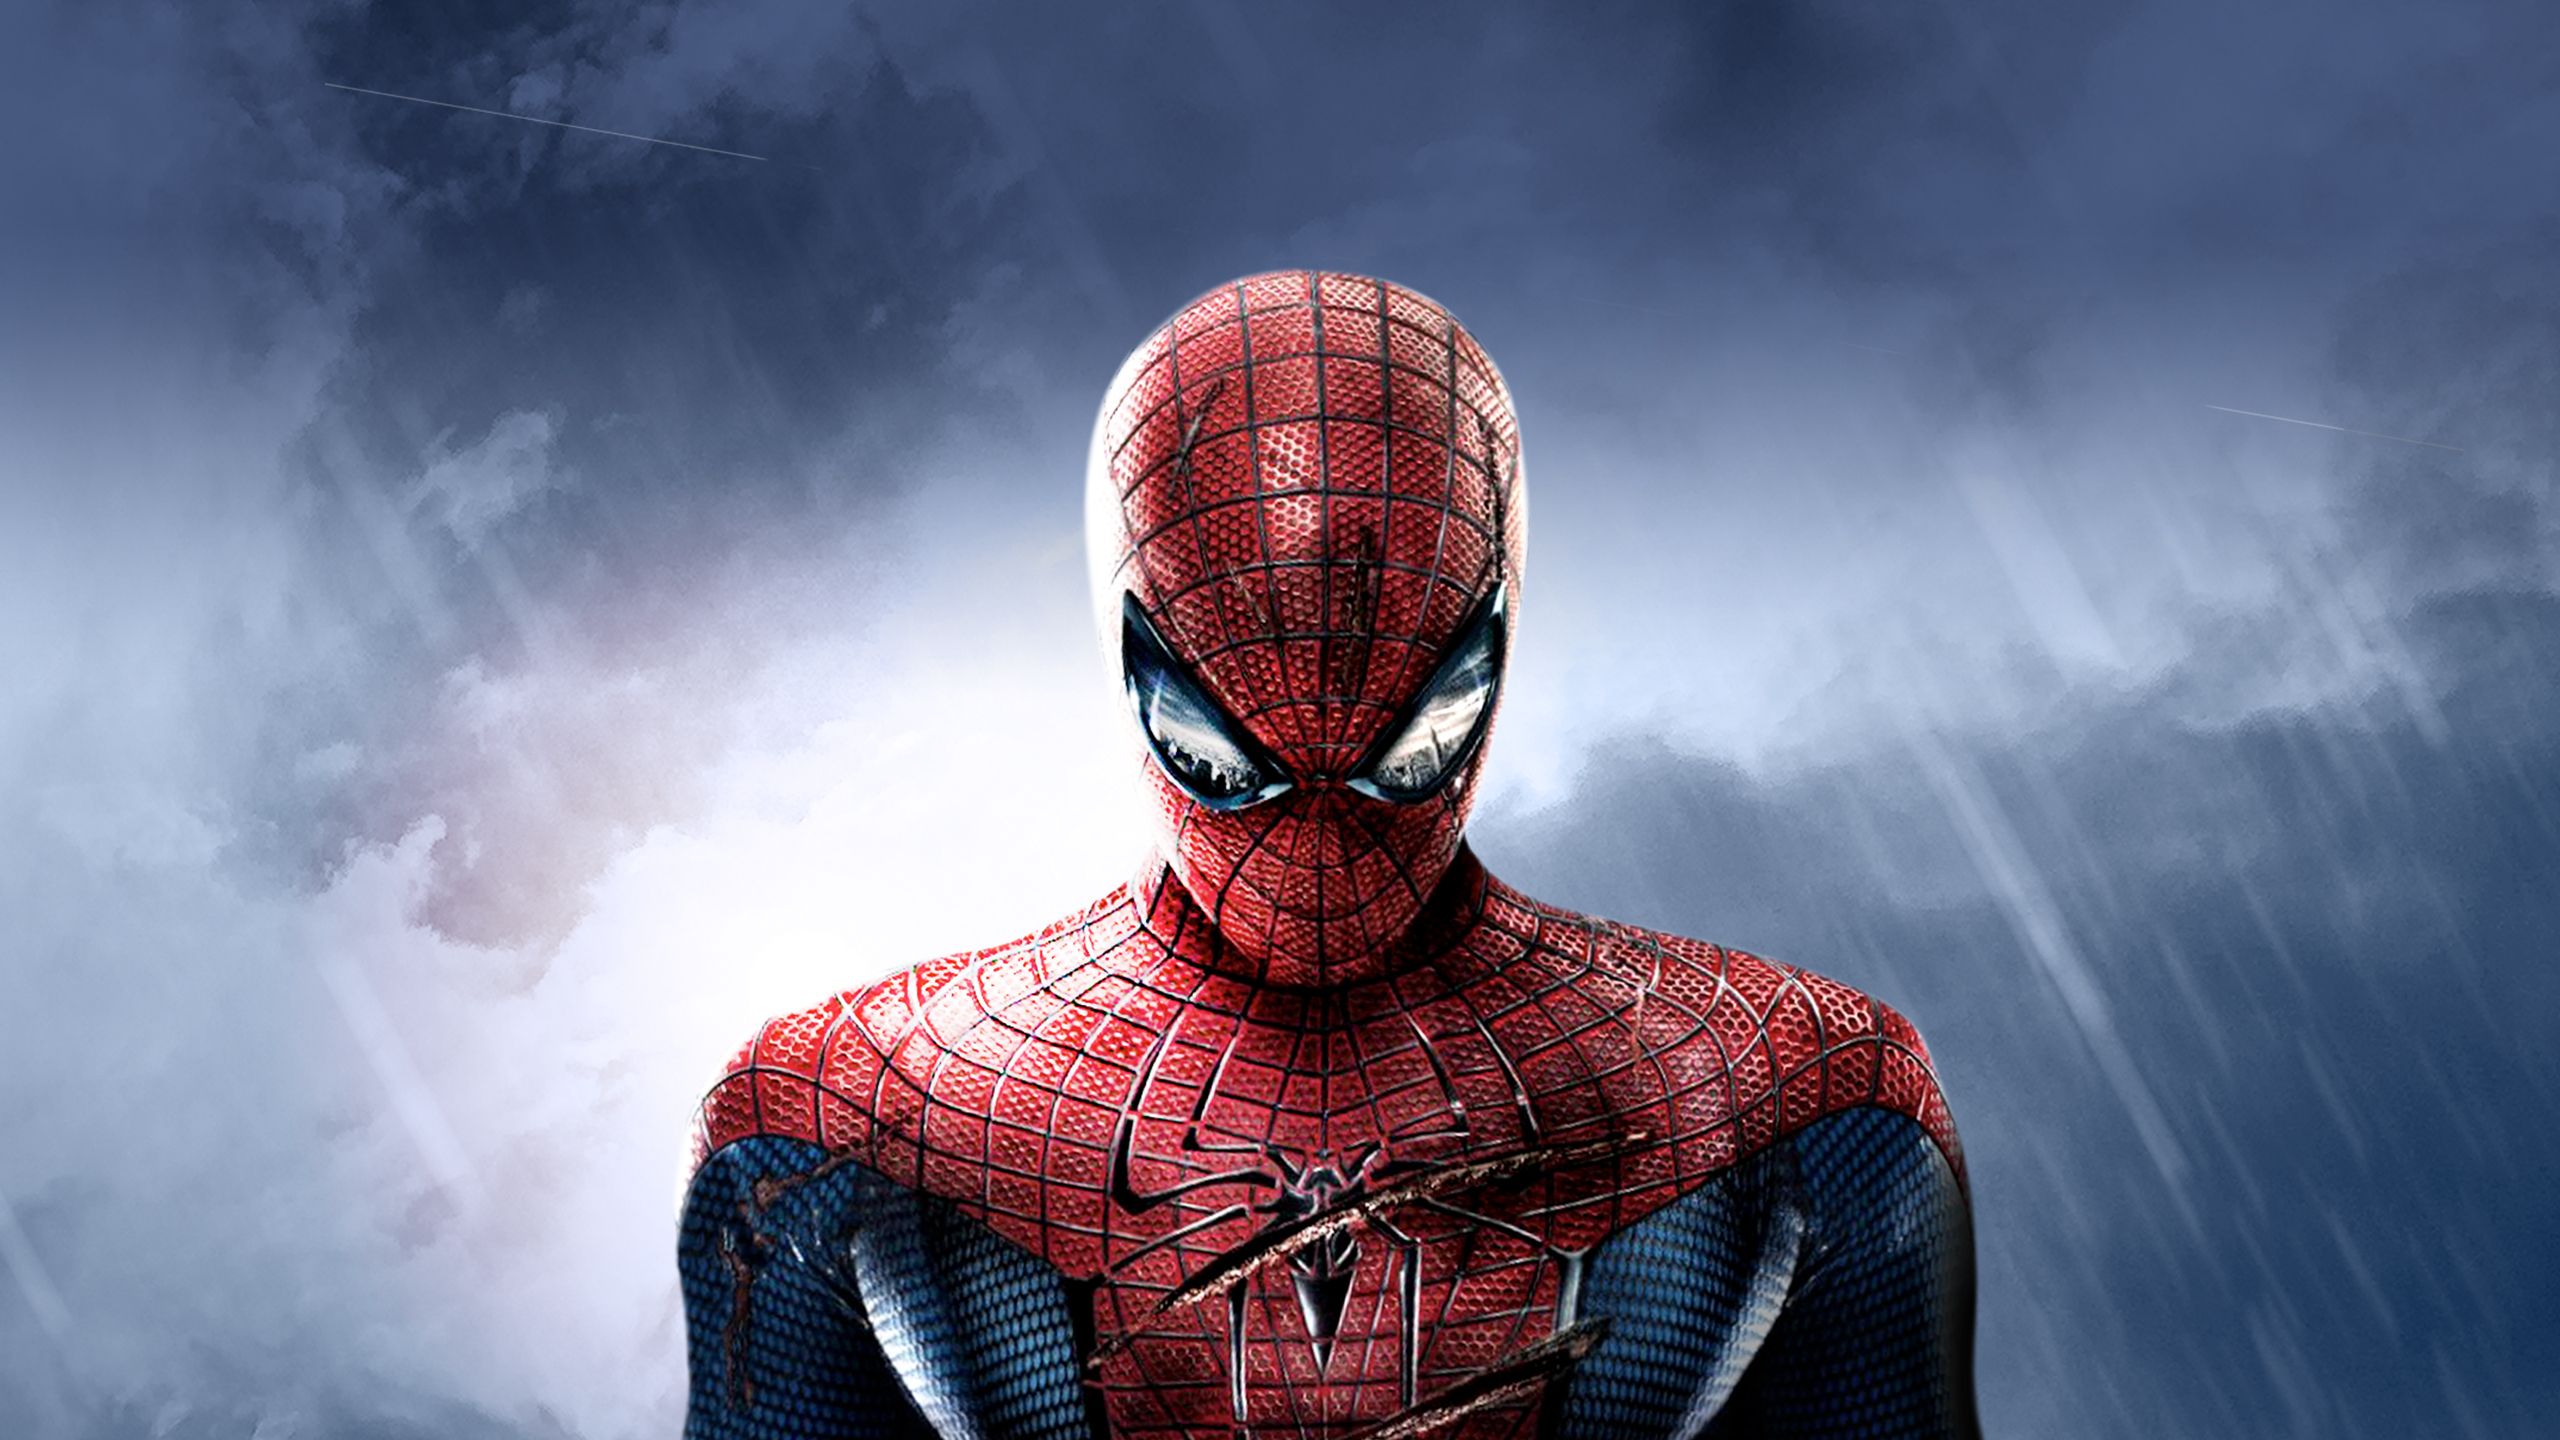 Amazing Spider-Man 2 Live WP (Premium) APK v2.04